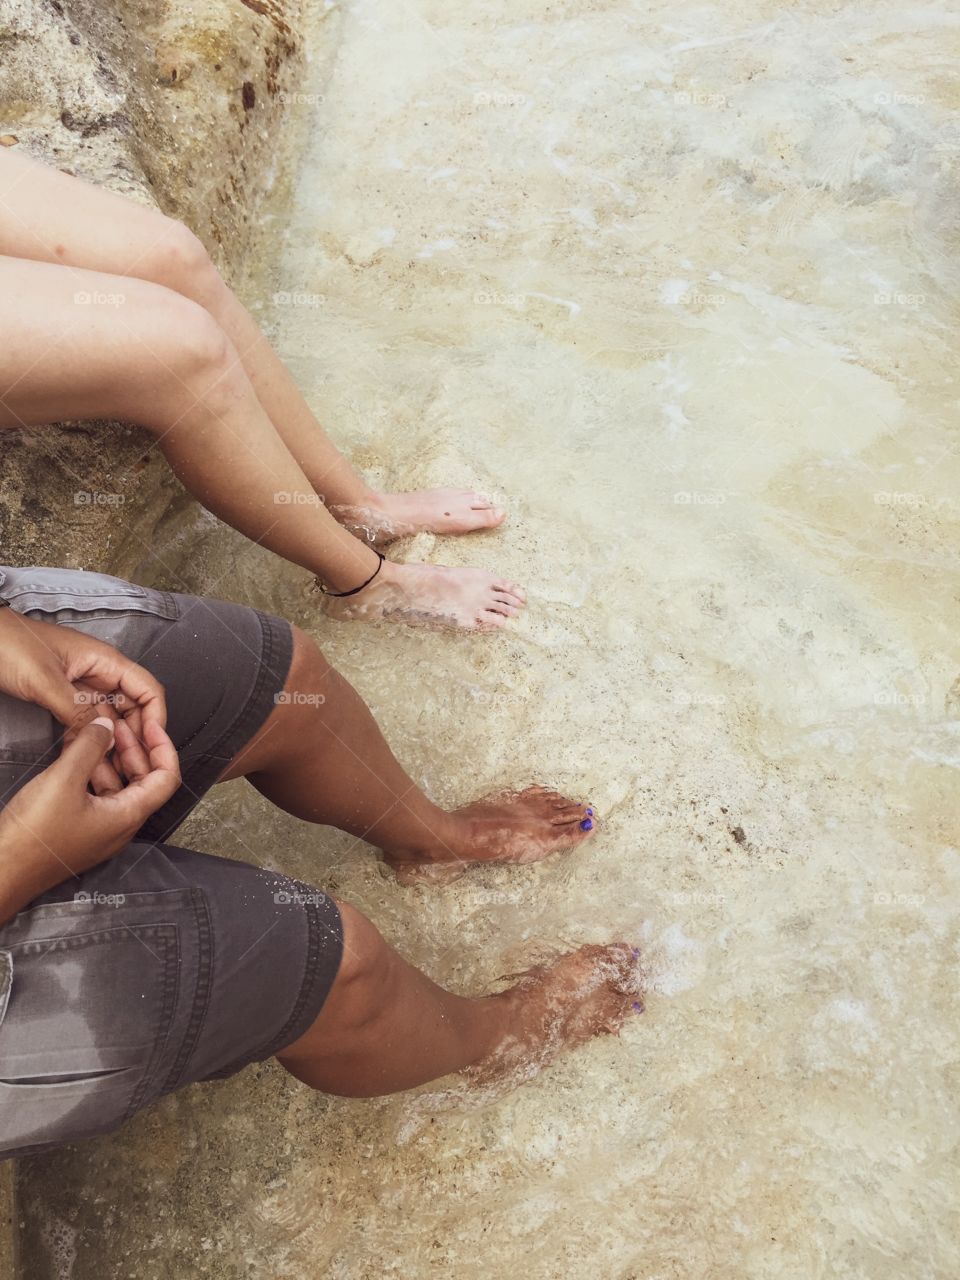 Women Relaxing In The Waters Of The Caribbean Ocean In St. Maarten, Feet In The Water, Beach Scene 